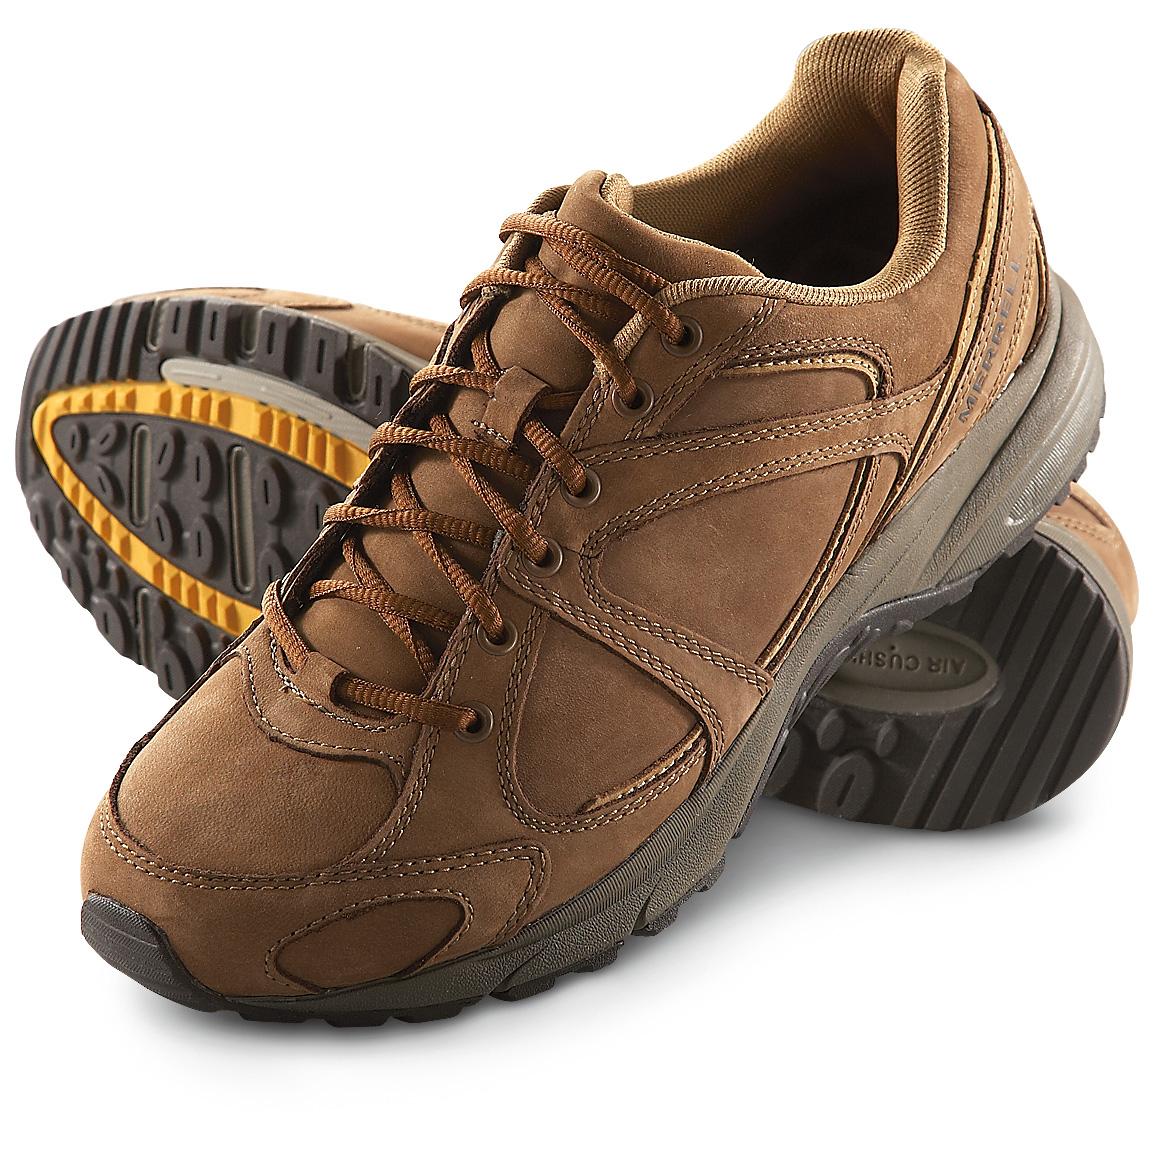 Men's Merrell® Meridian Walking Shoes, Dark Earth - 220275, Running ...